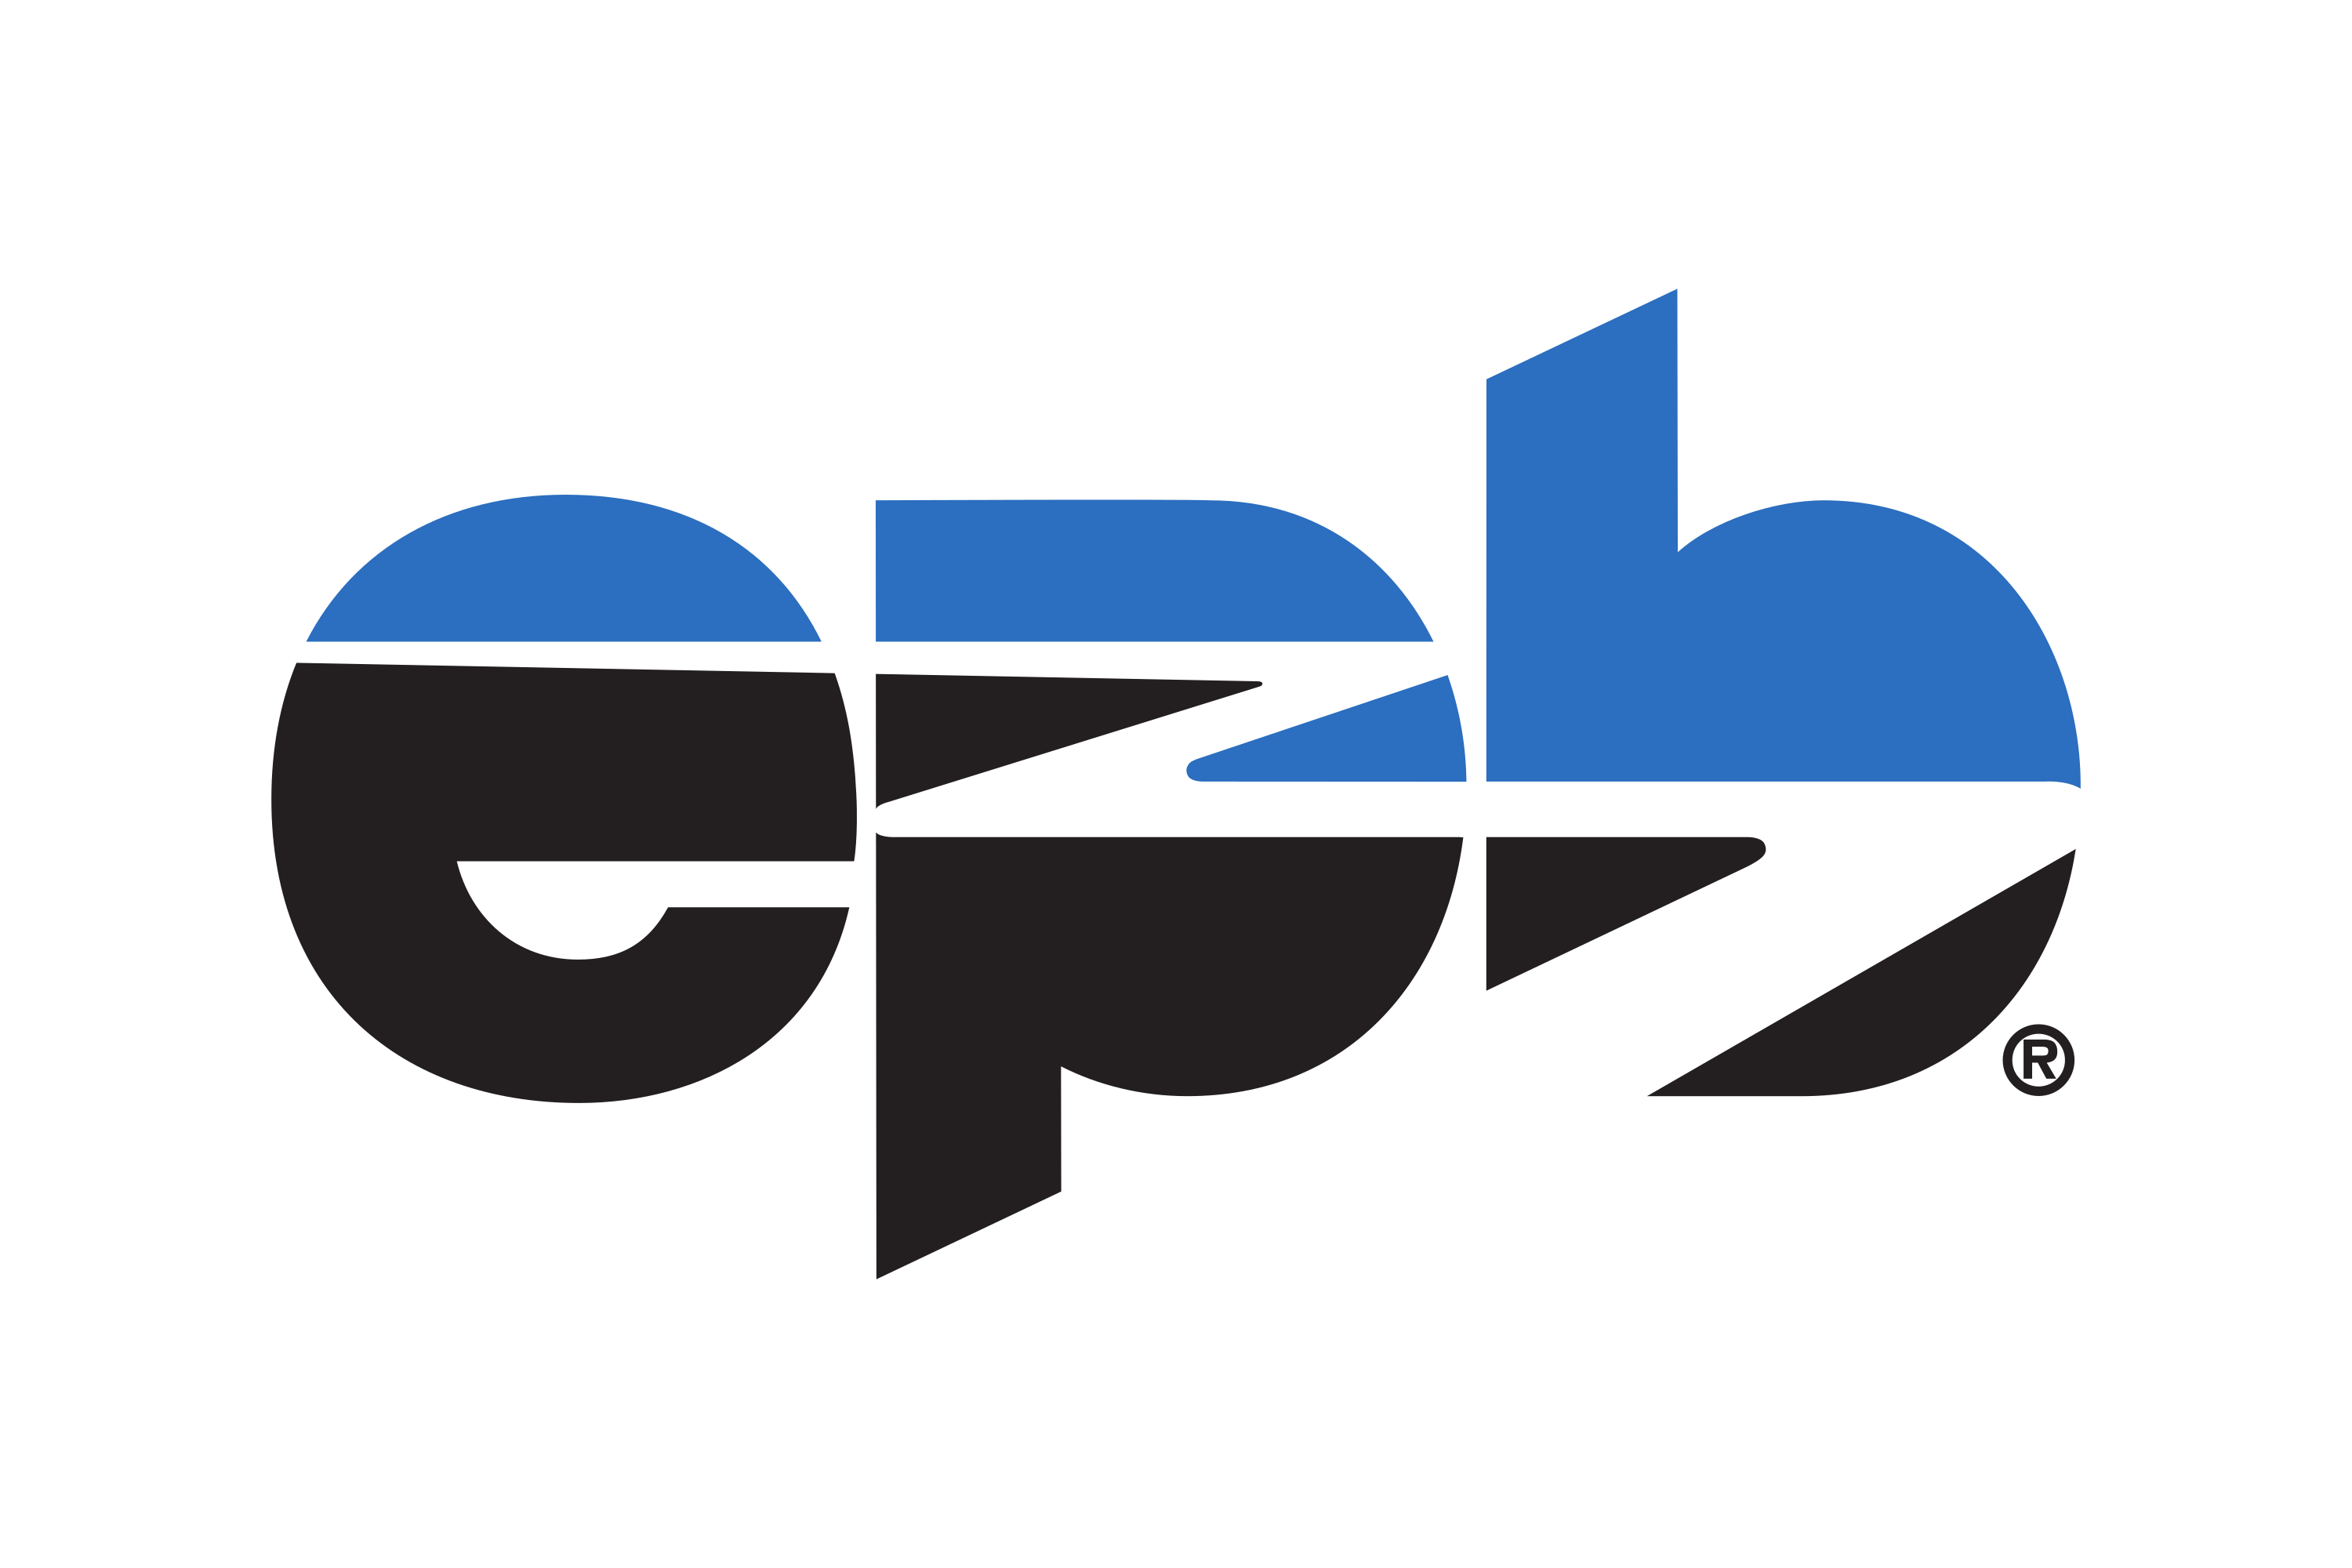 Download EPB Logo in SVG Vector or PNG File Format - Logo.wine